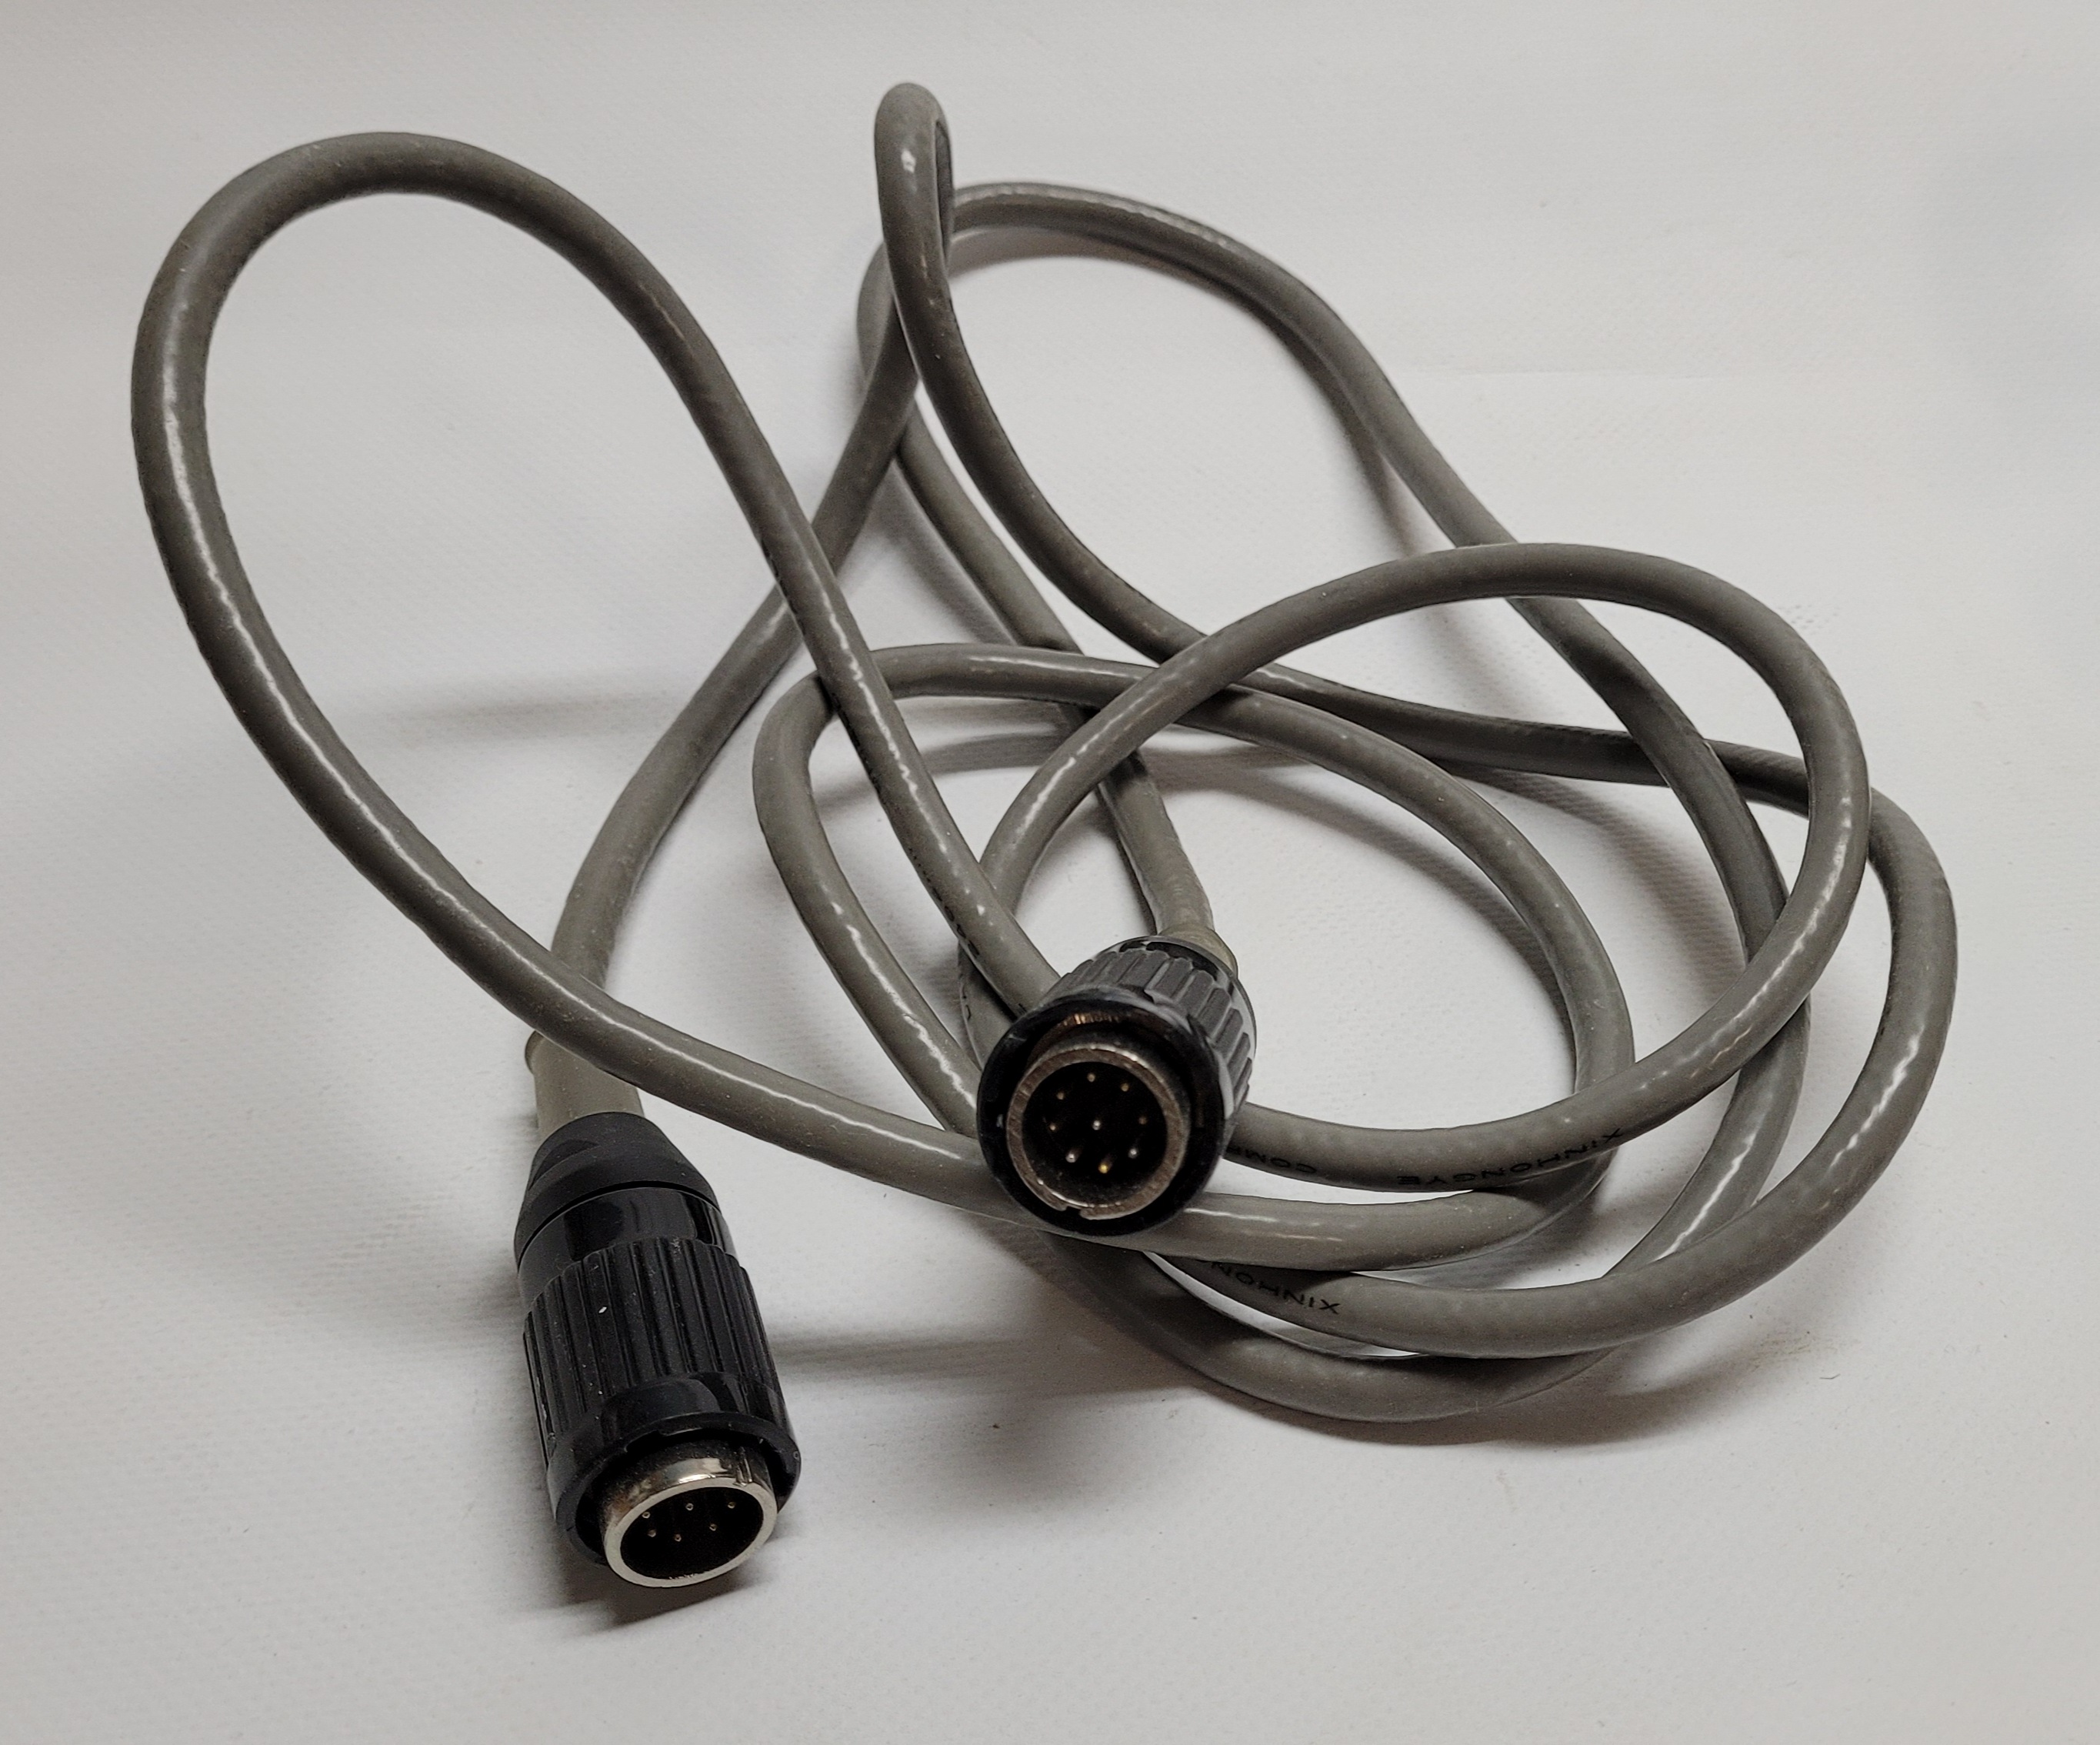 This a thumbnail of Kipor Parallel Twist Lock Wiring Kit #66624